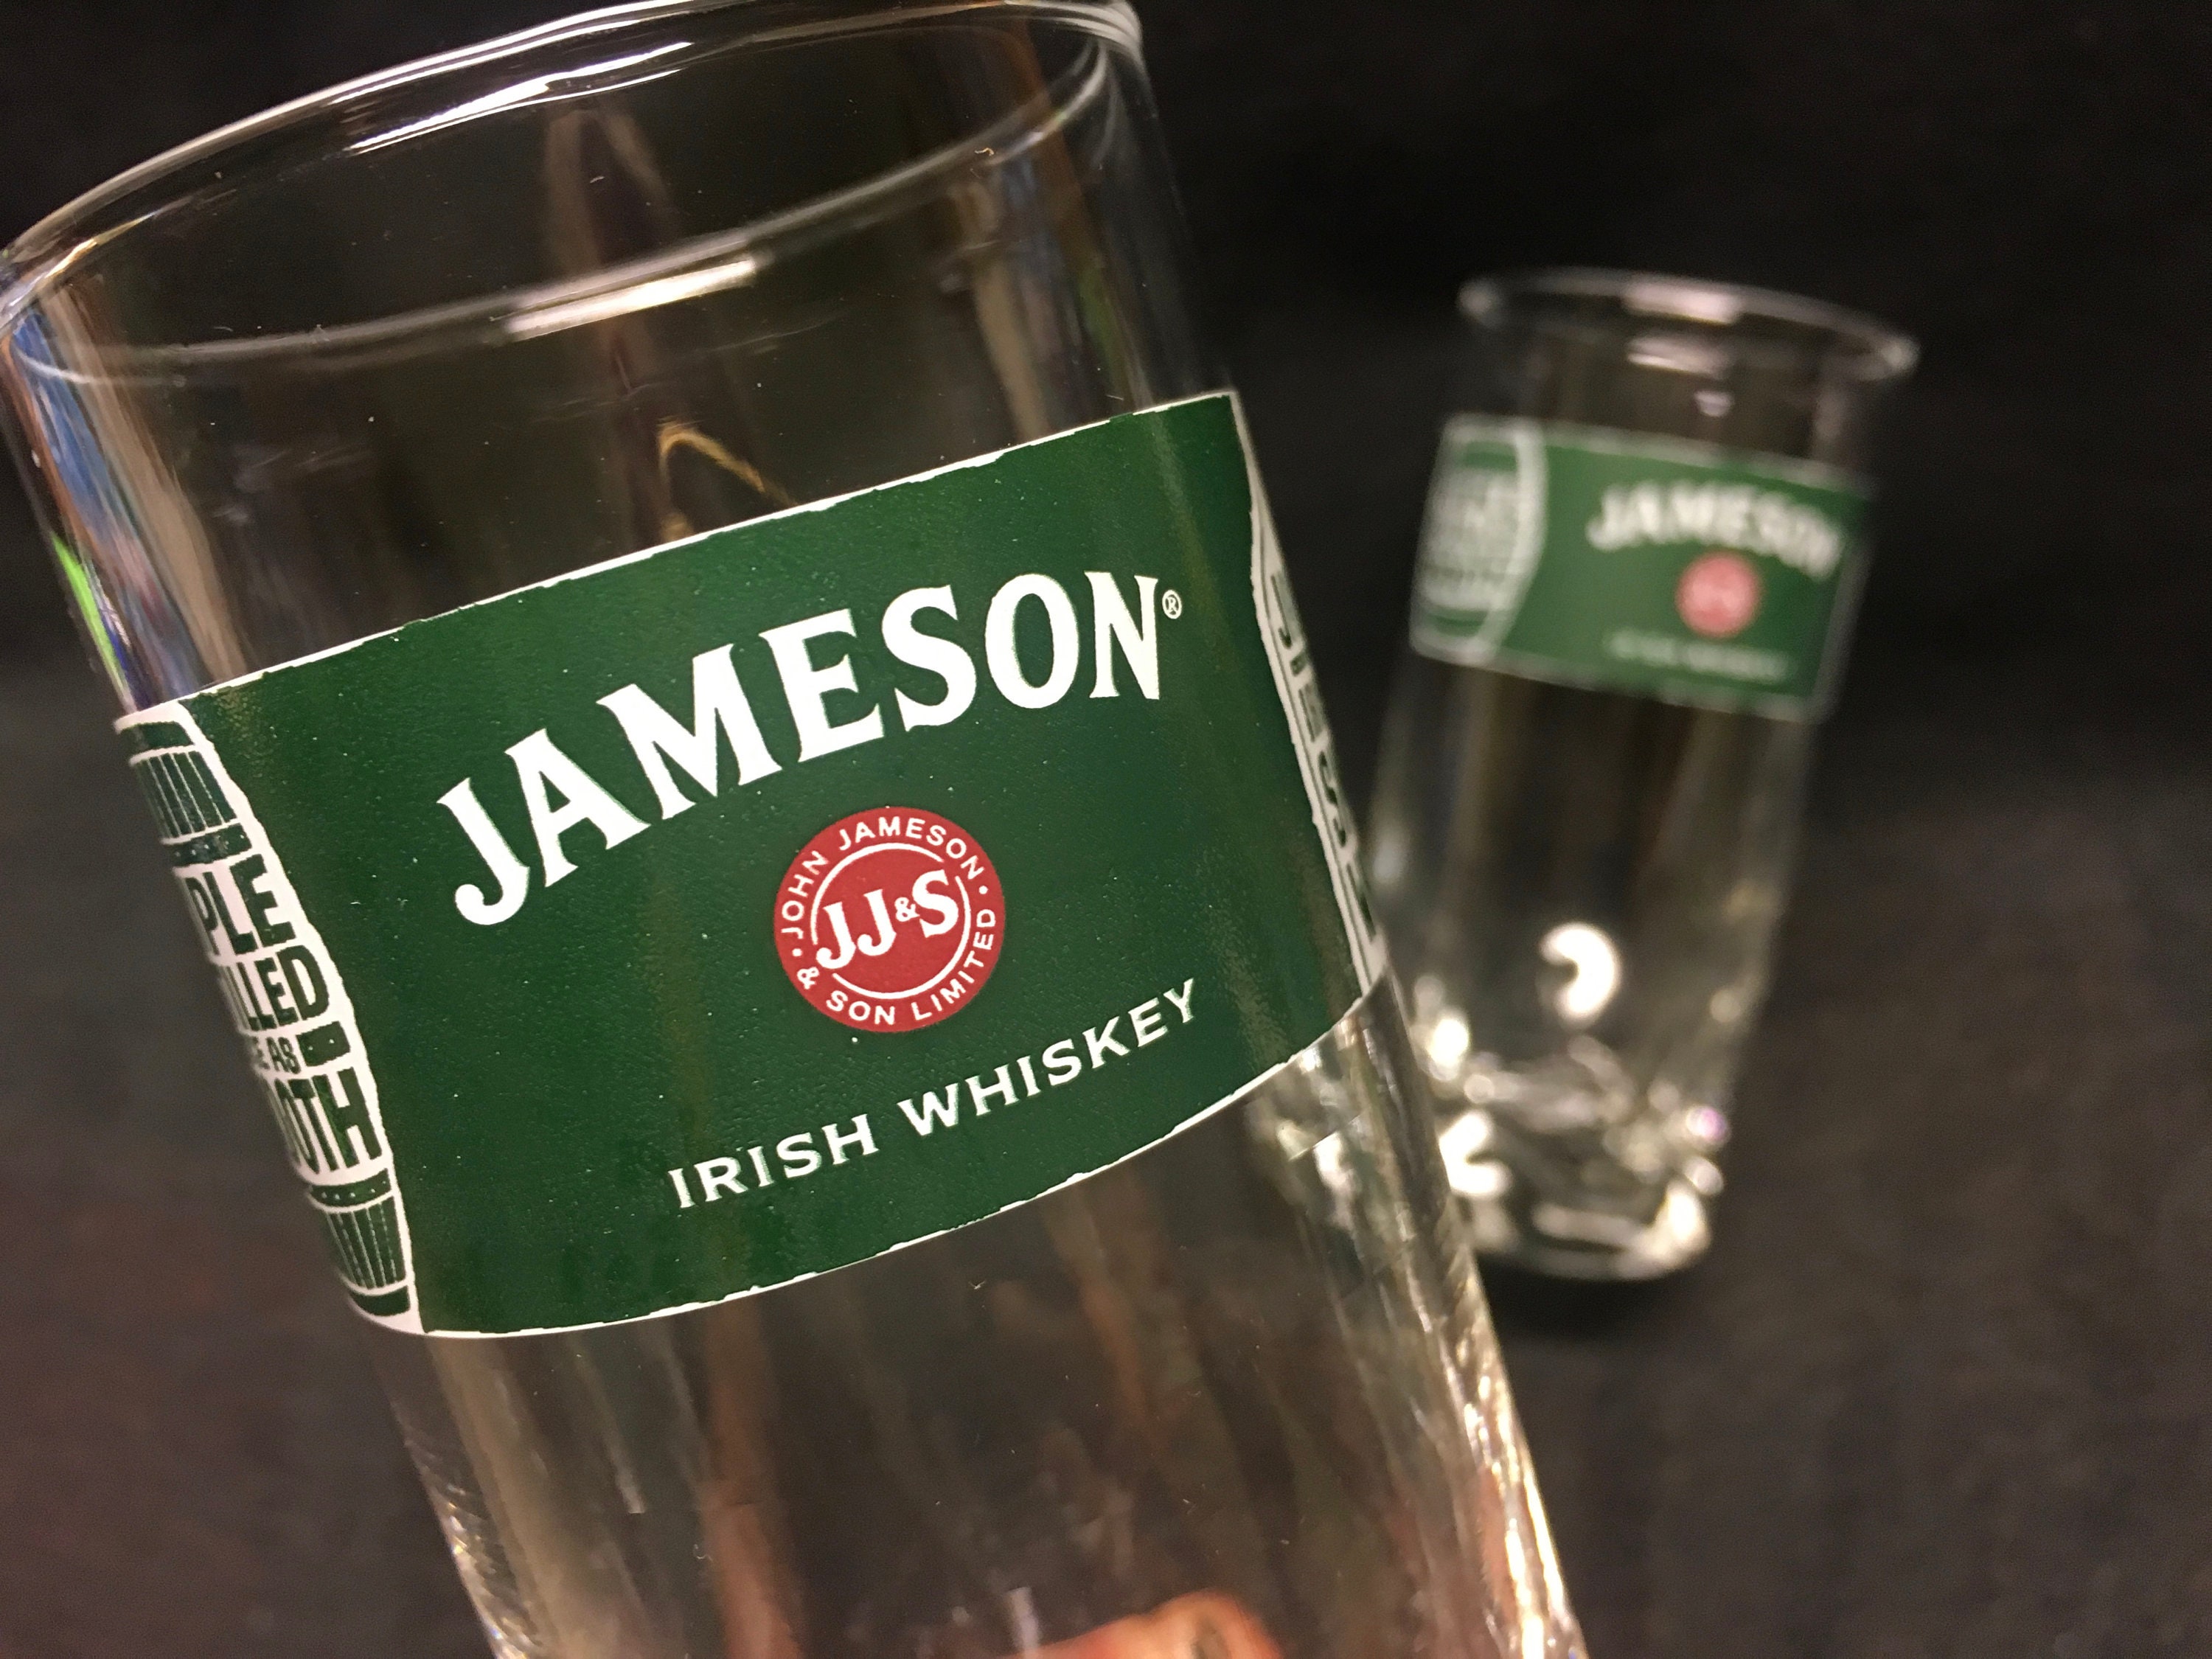 Jameson Glass Tumbler - Pack of 2